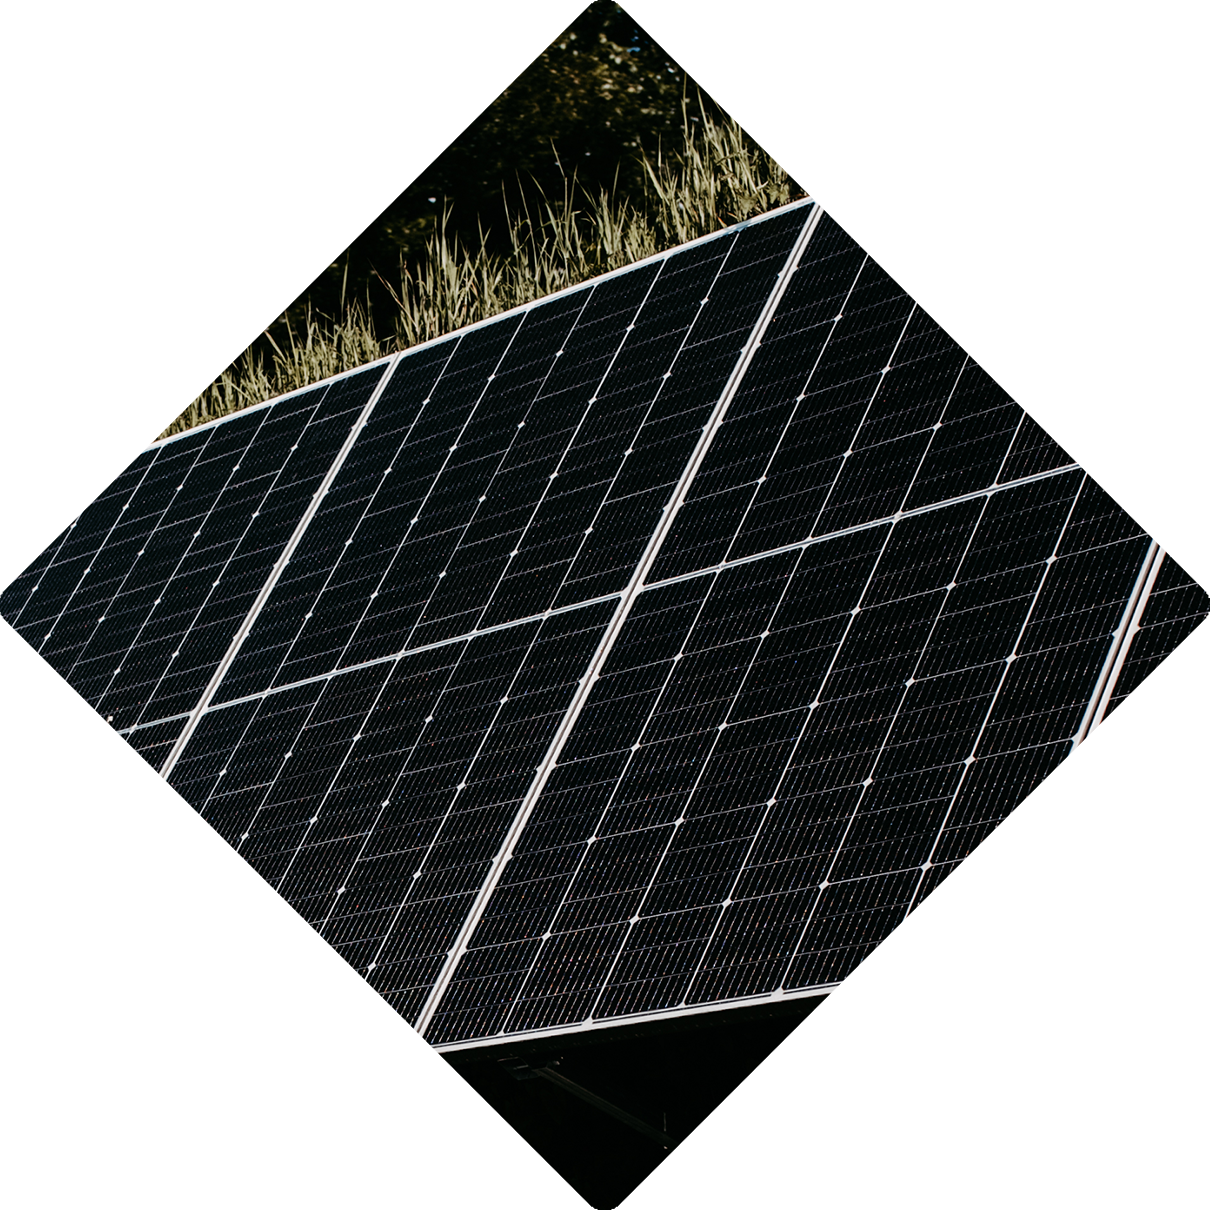 Photovoltaikmodul